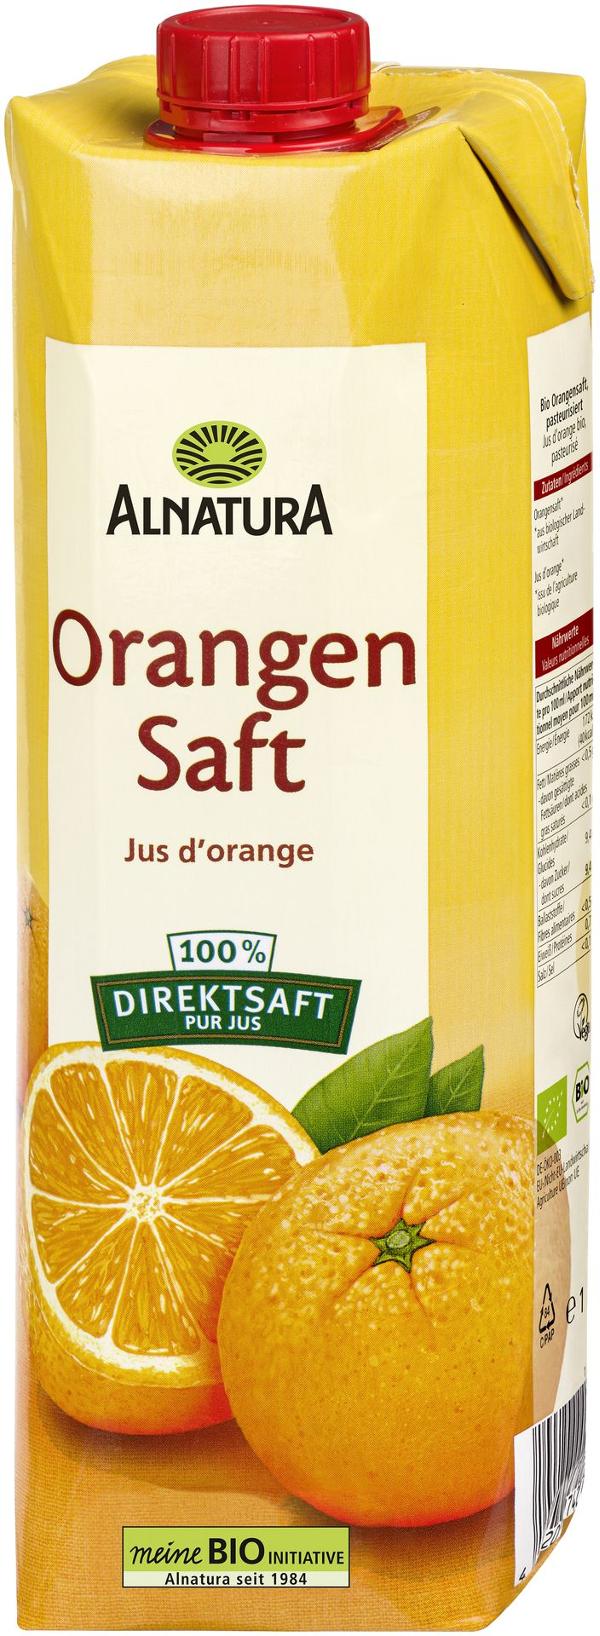 Produktfoto zu Orangensaft 1 l Alnatura